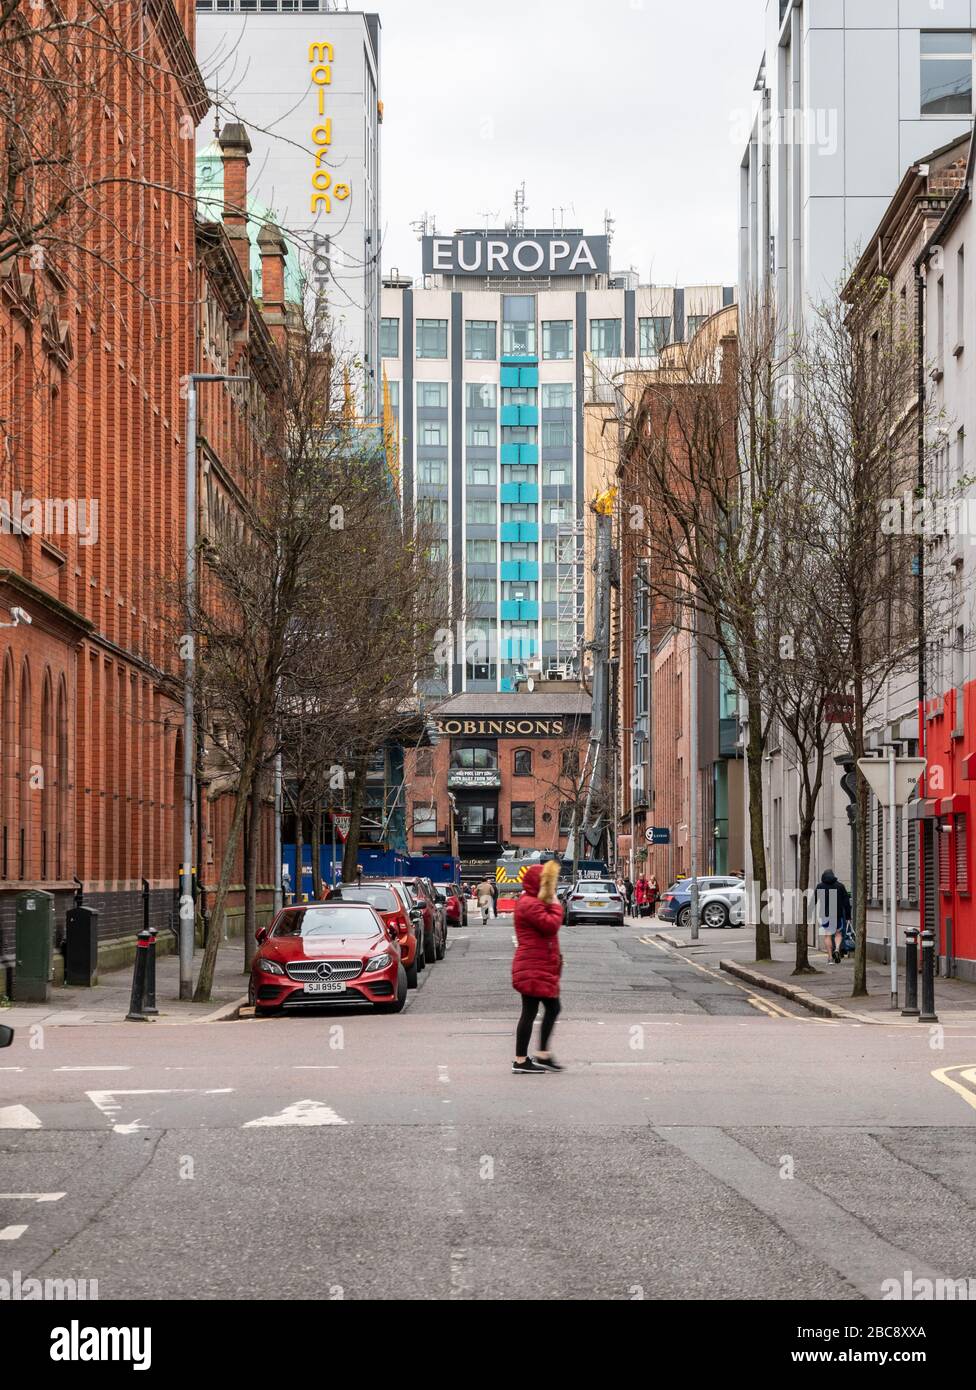 Belfast, Northern Ireland, UK - February 8, The Europa Hotel viewed along Franklin Street Stock Photo